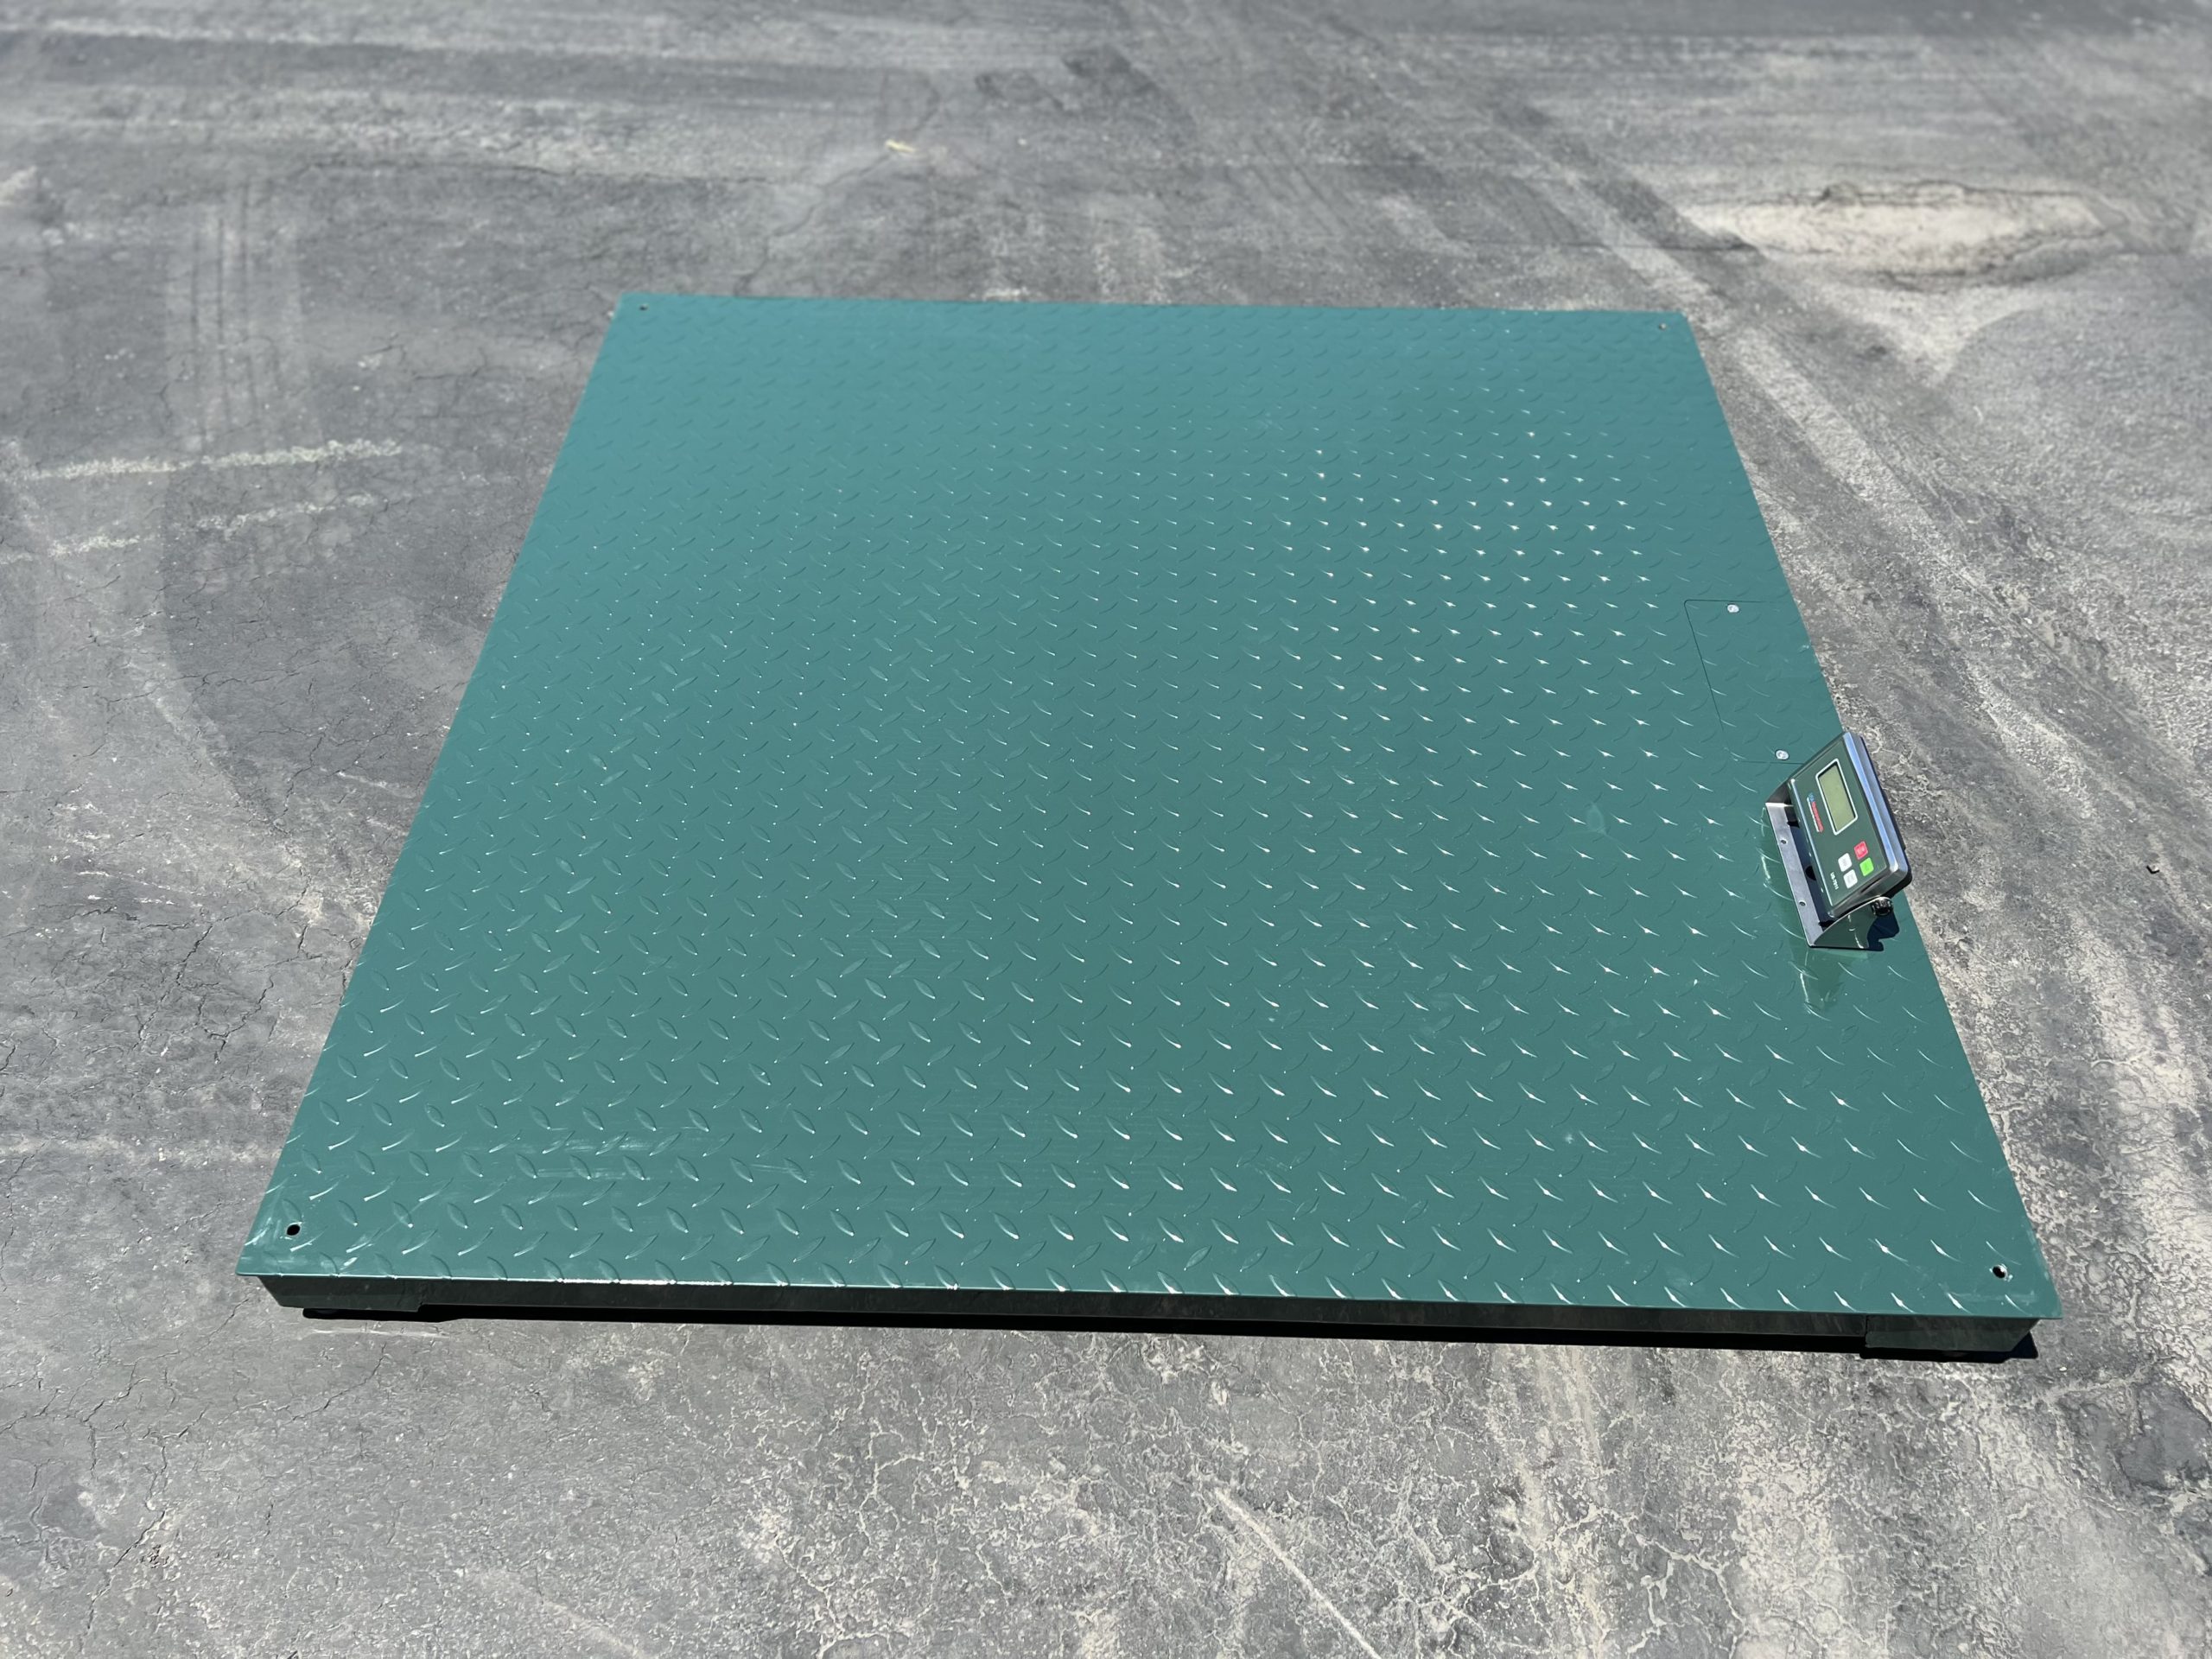 AFK Floor Weighing Scales, Capacity: 150kg - Readability: 10g - Pan Size:  400 x 500mm - Cleaver Scientific